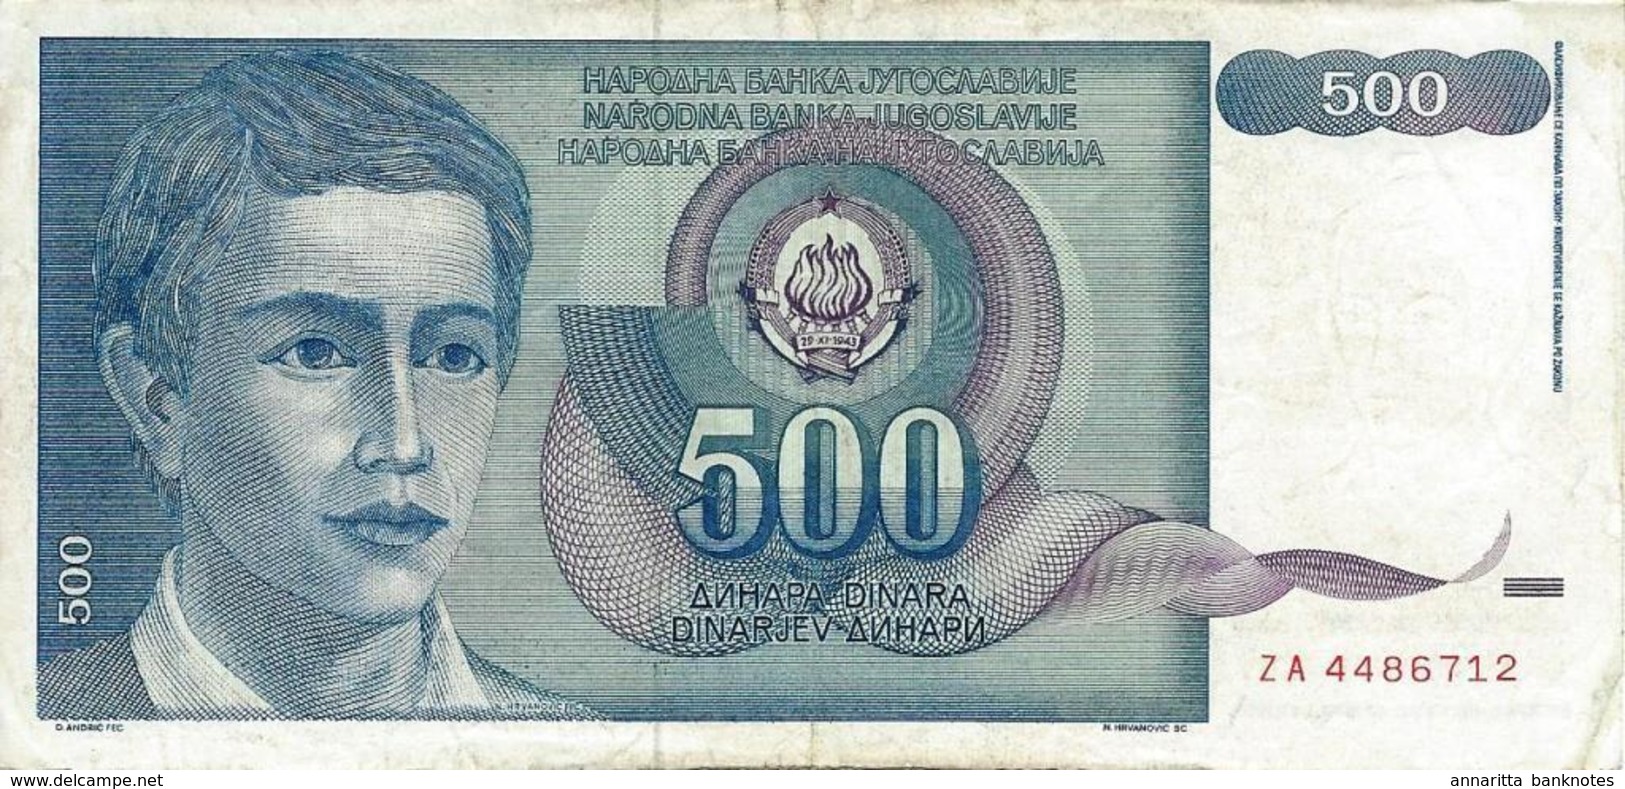 YUGOSLAVIA 500 DINARA 1990 P-106r VF REPLACEMENT S/N ZA 4486712 [YU106rep] - Yougoslavie